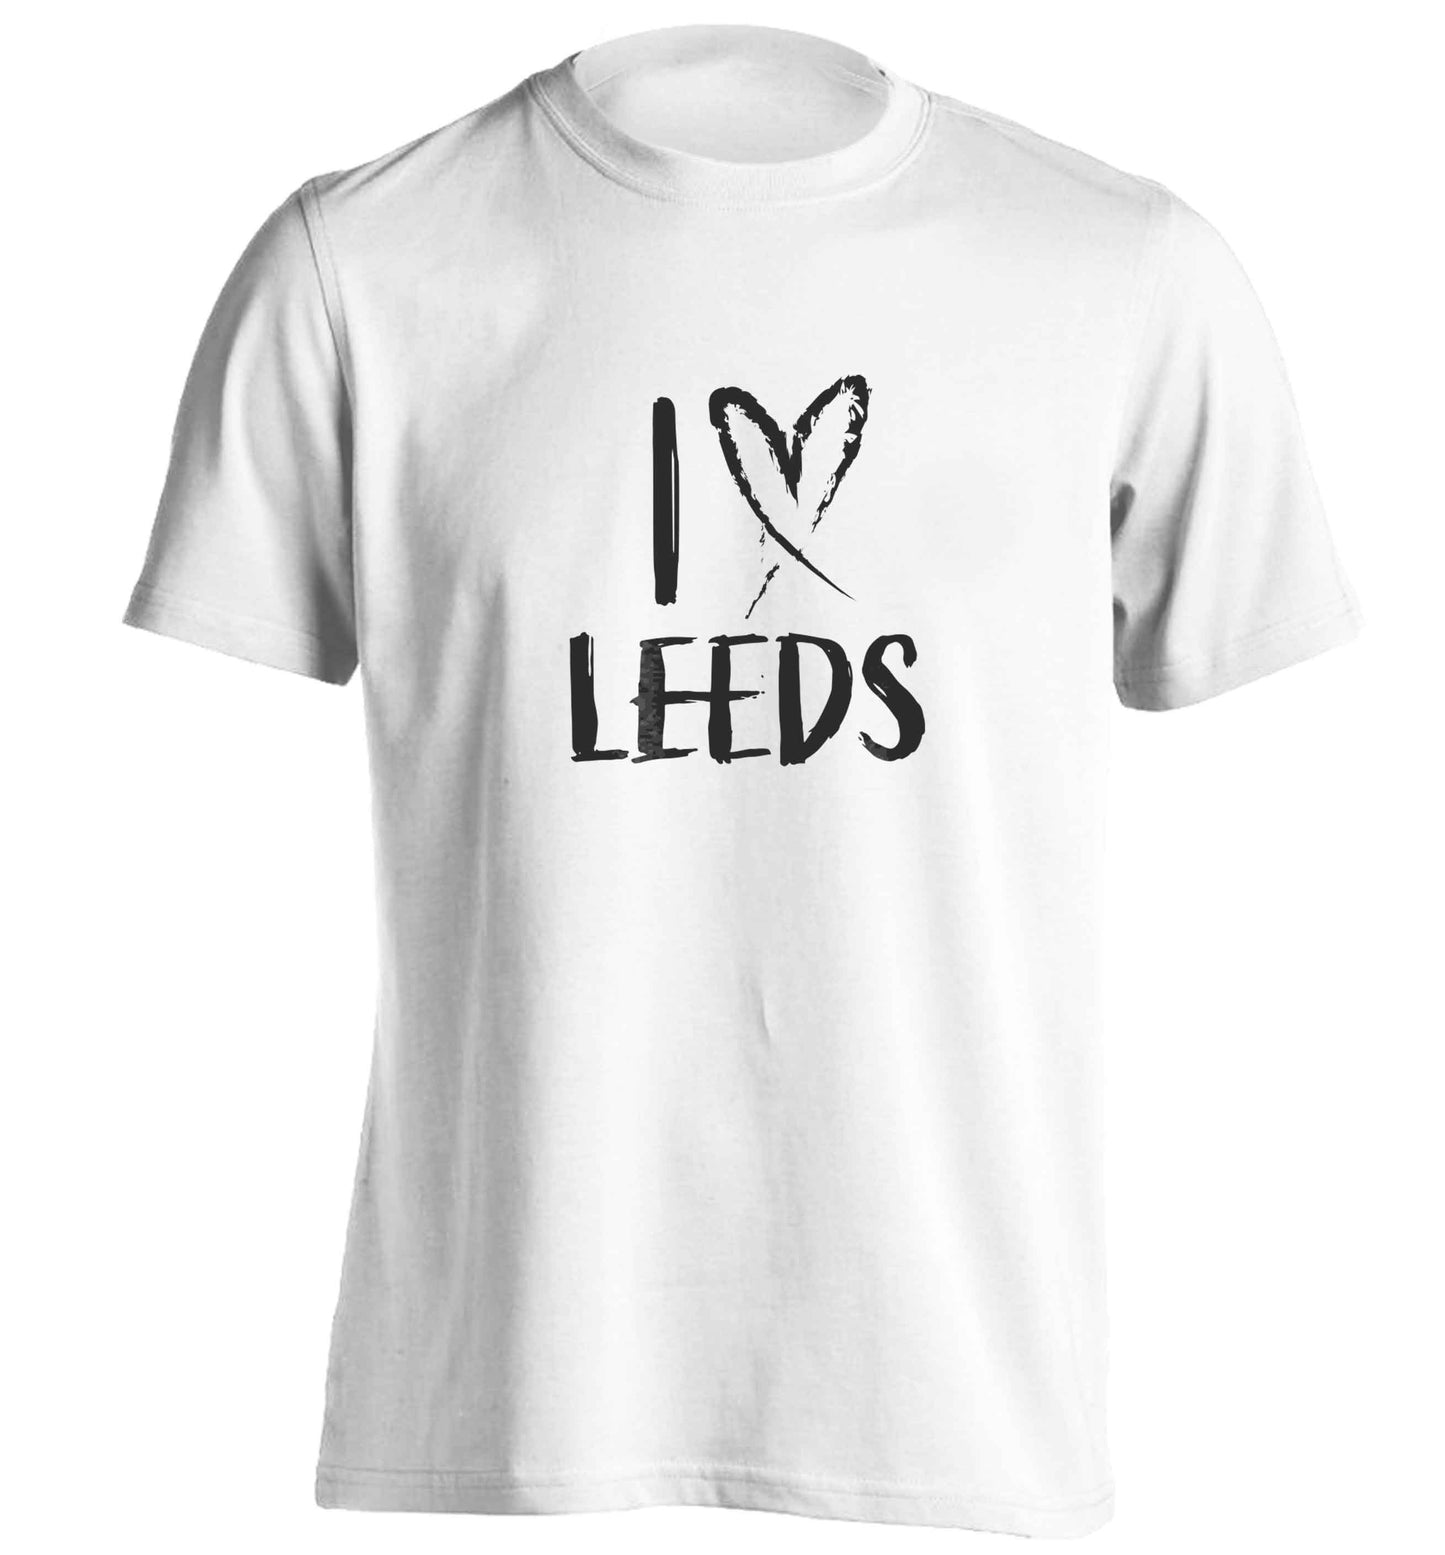 I love Leeds adults unisex white Tshirt 2XL